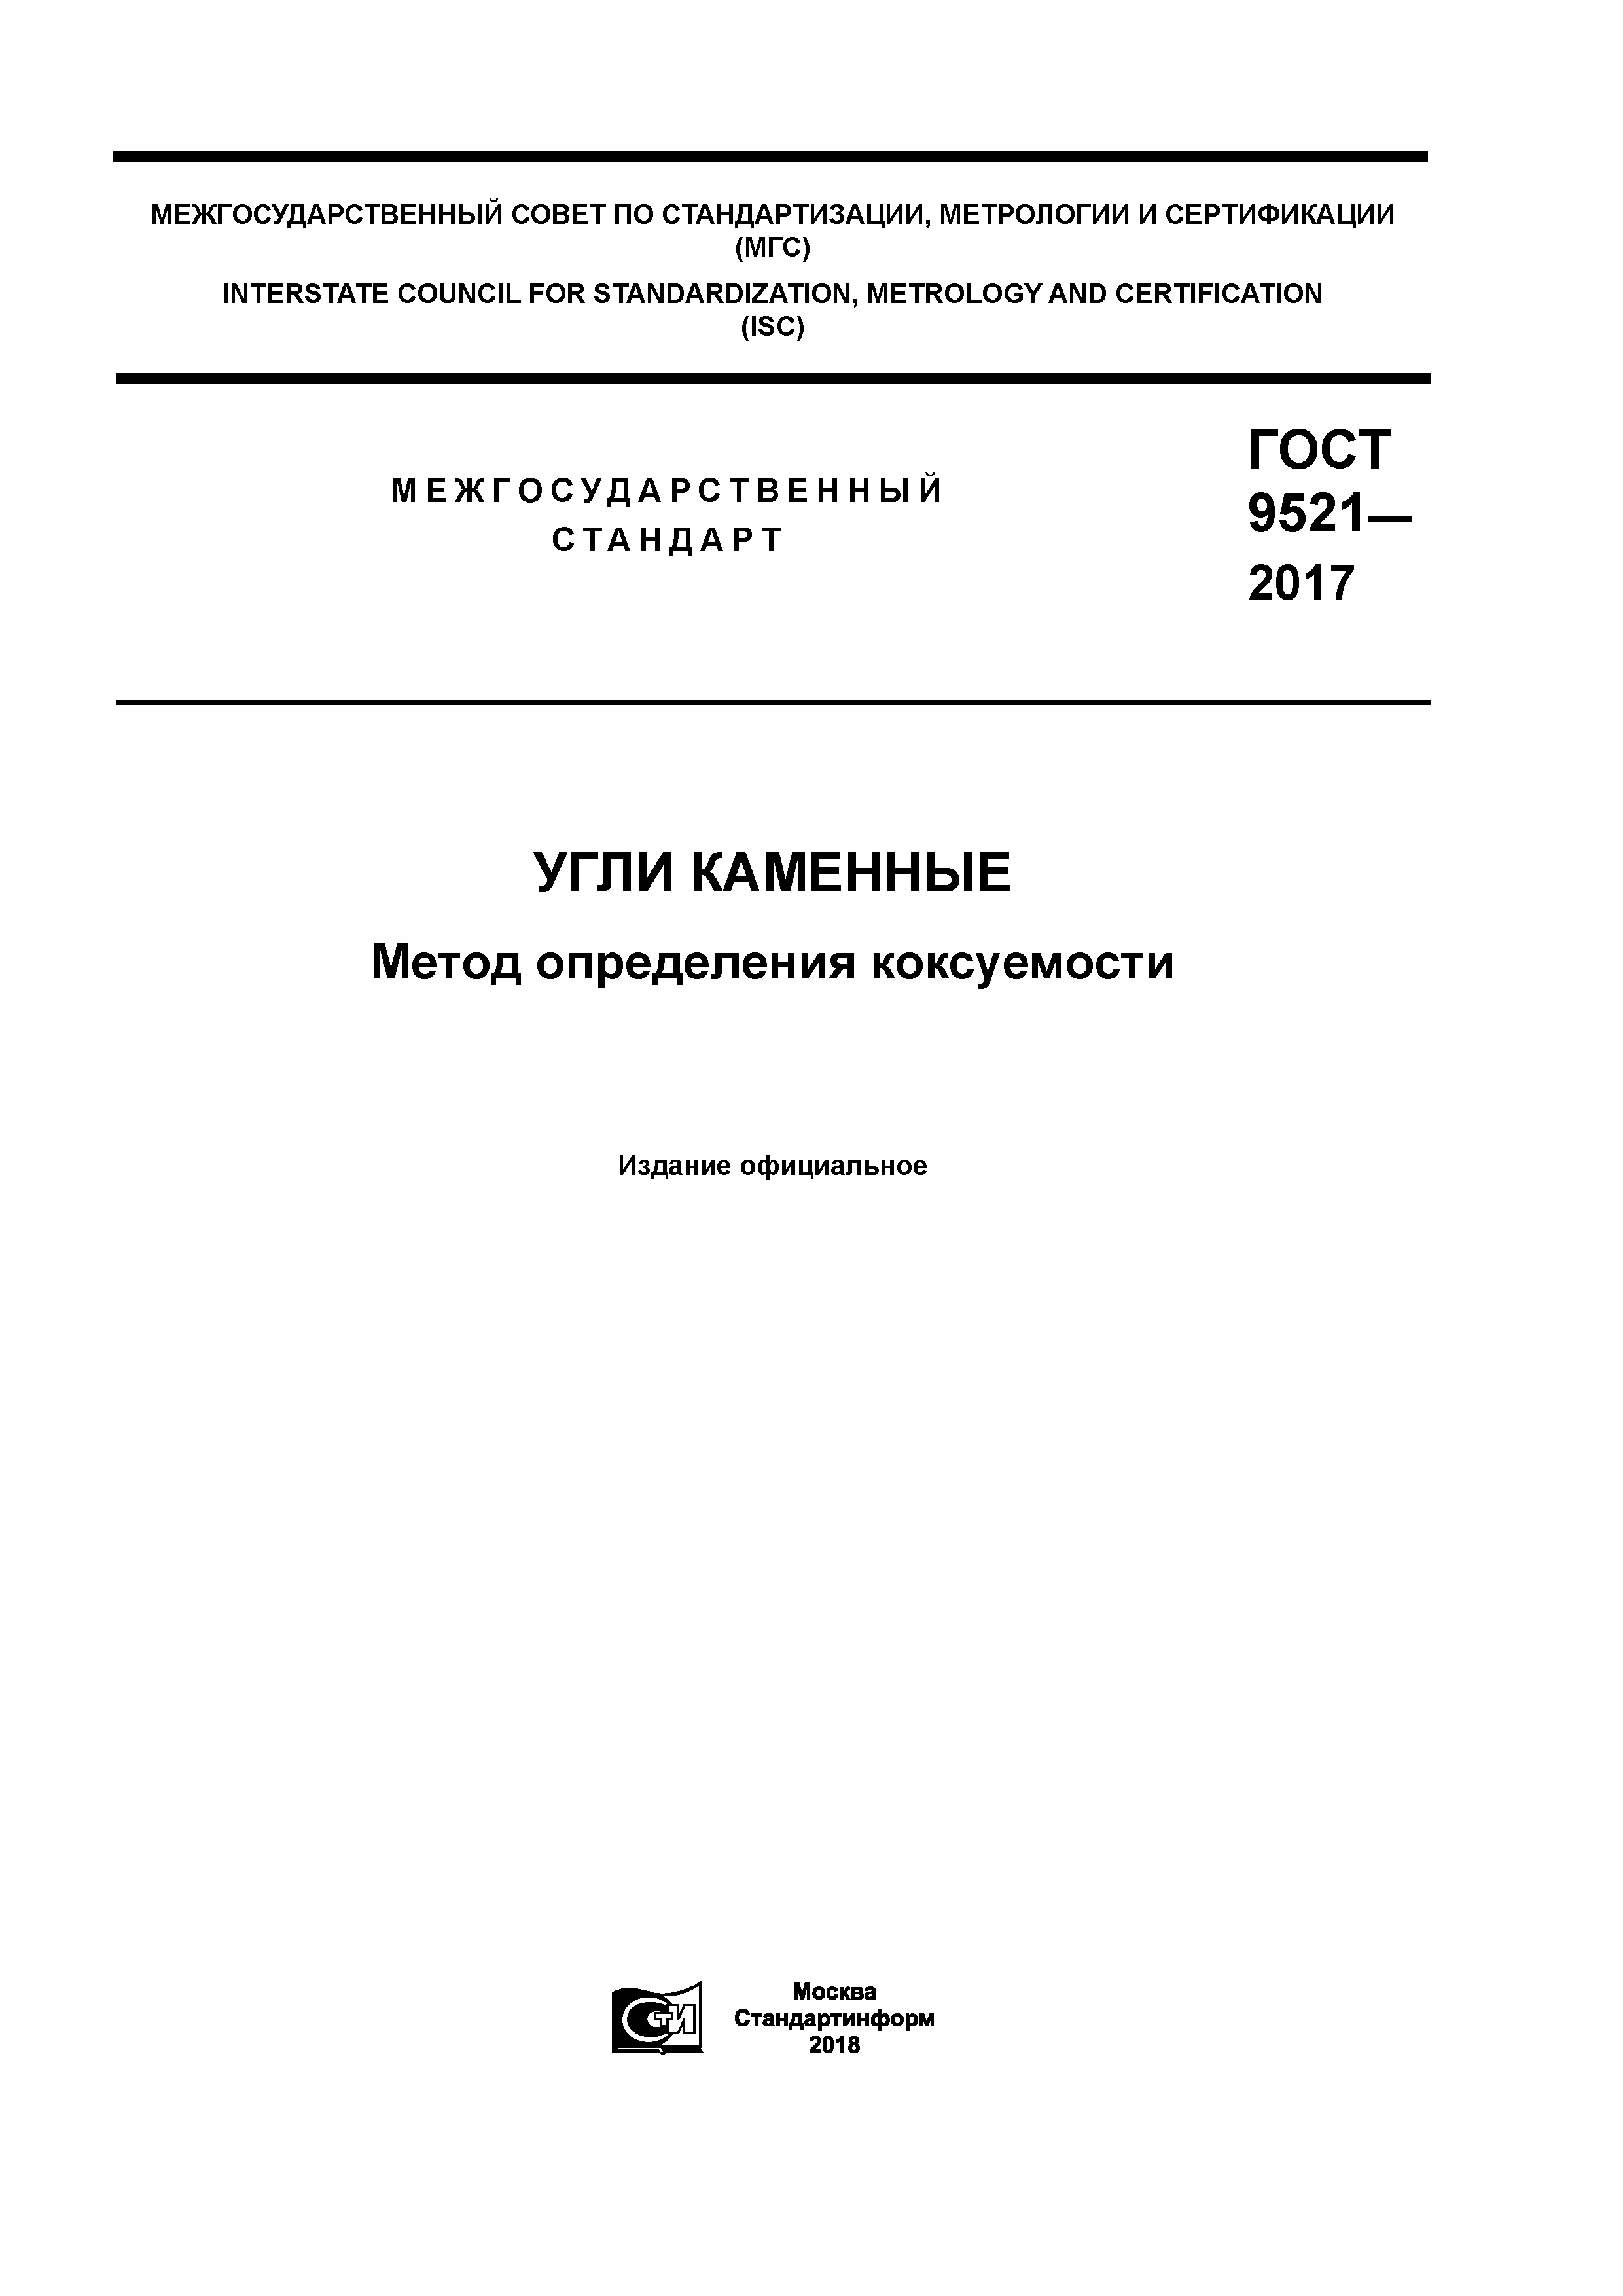 ГОСТ 9521-2017